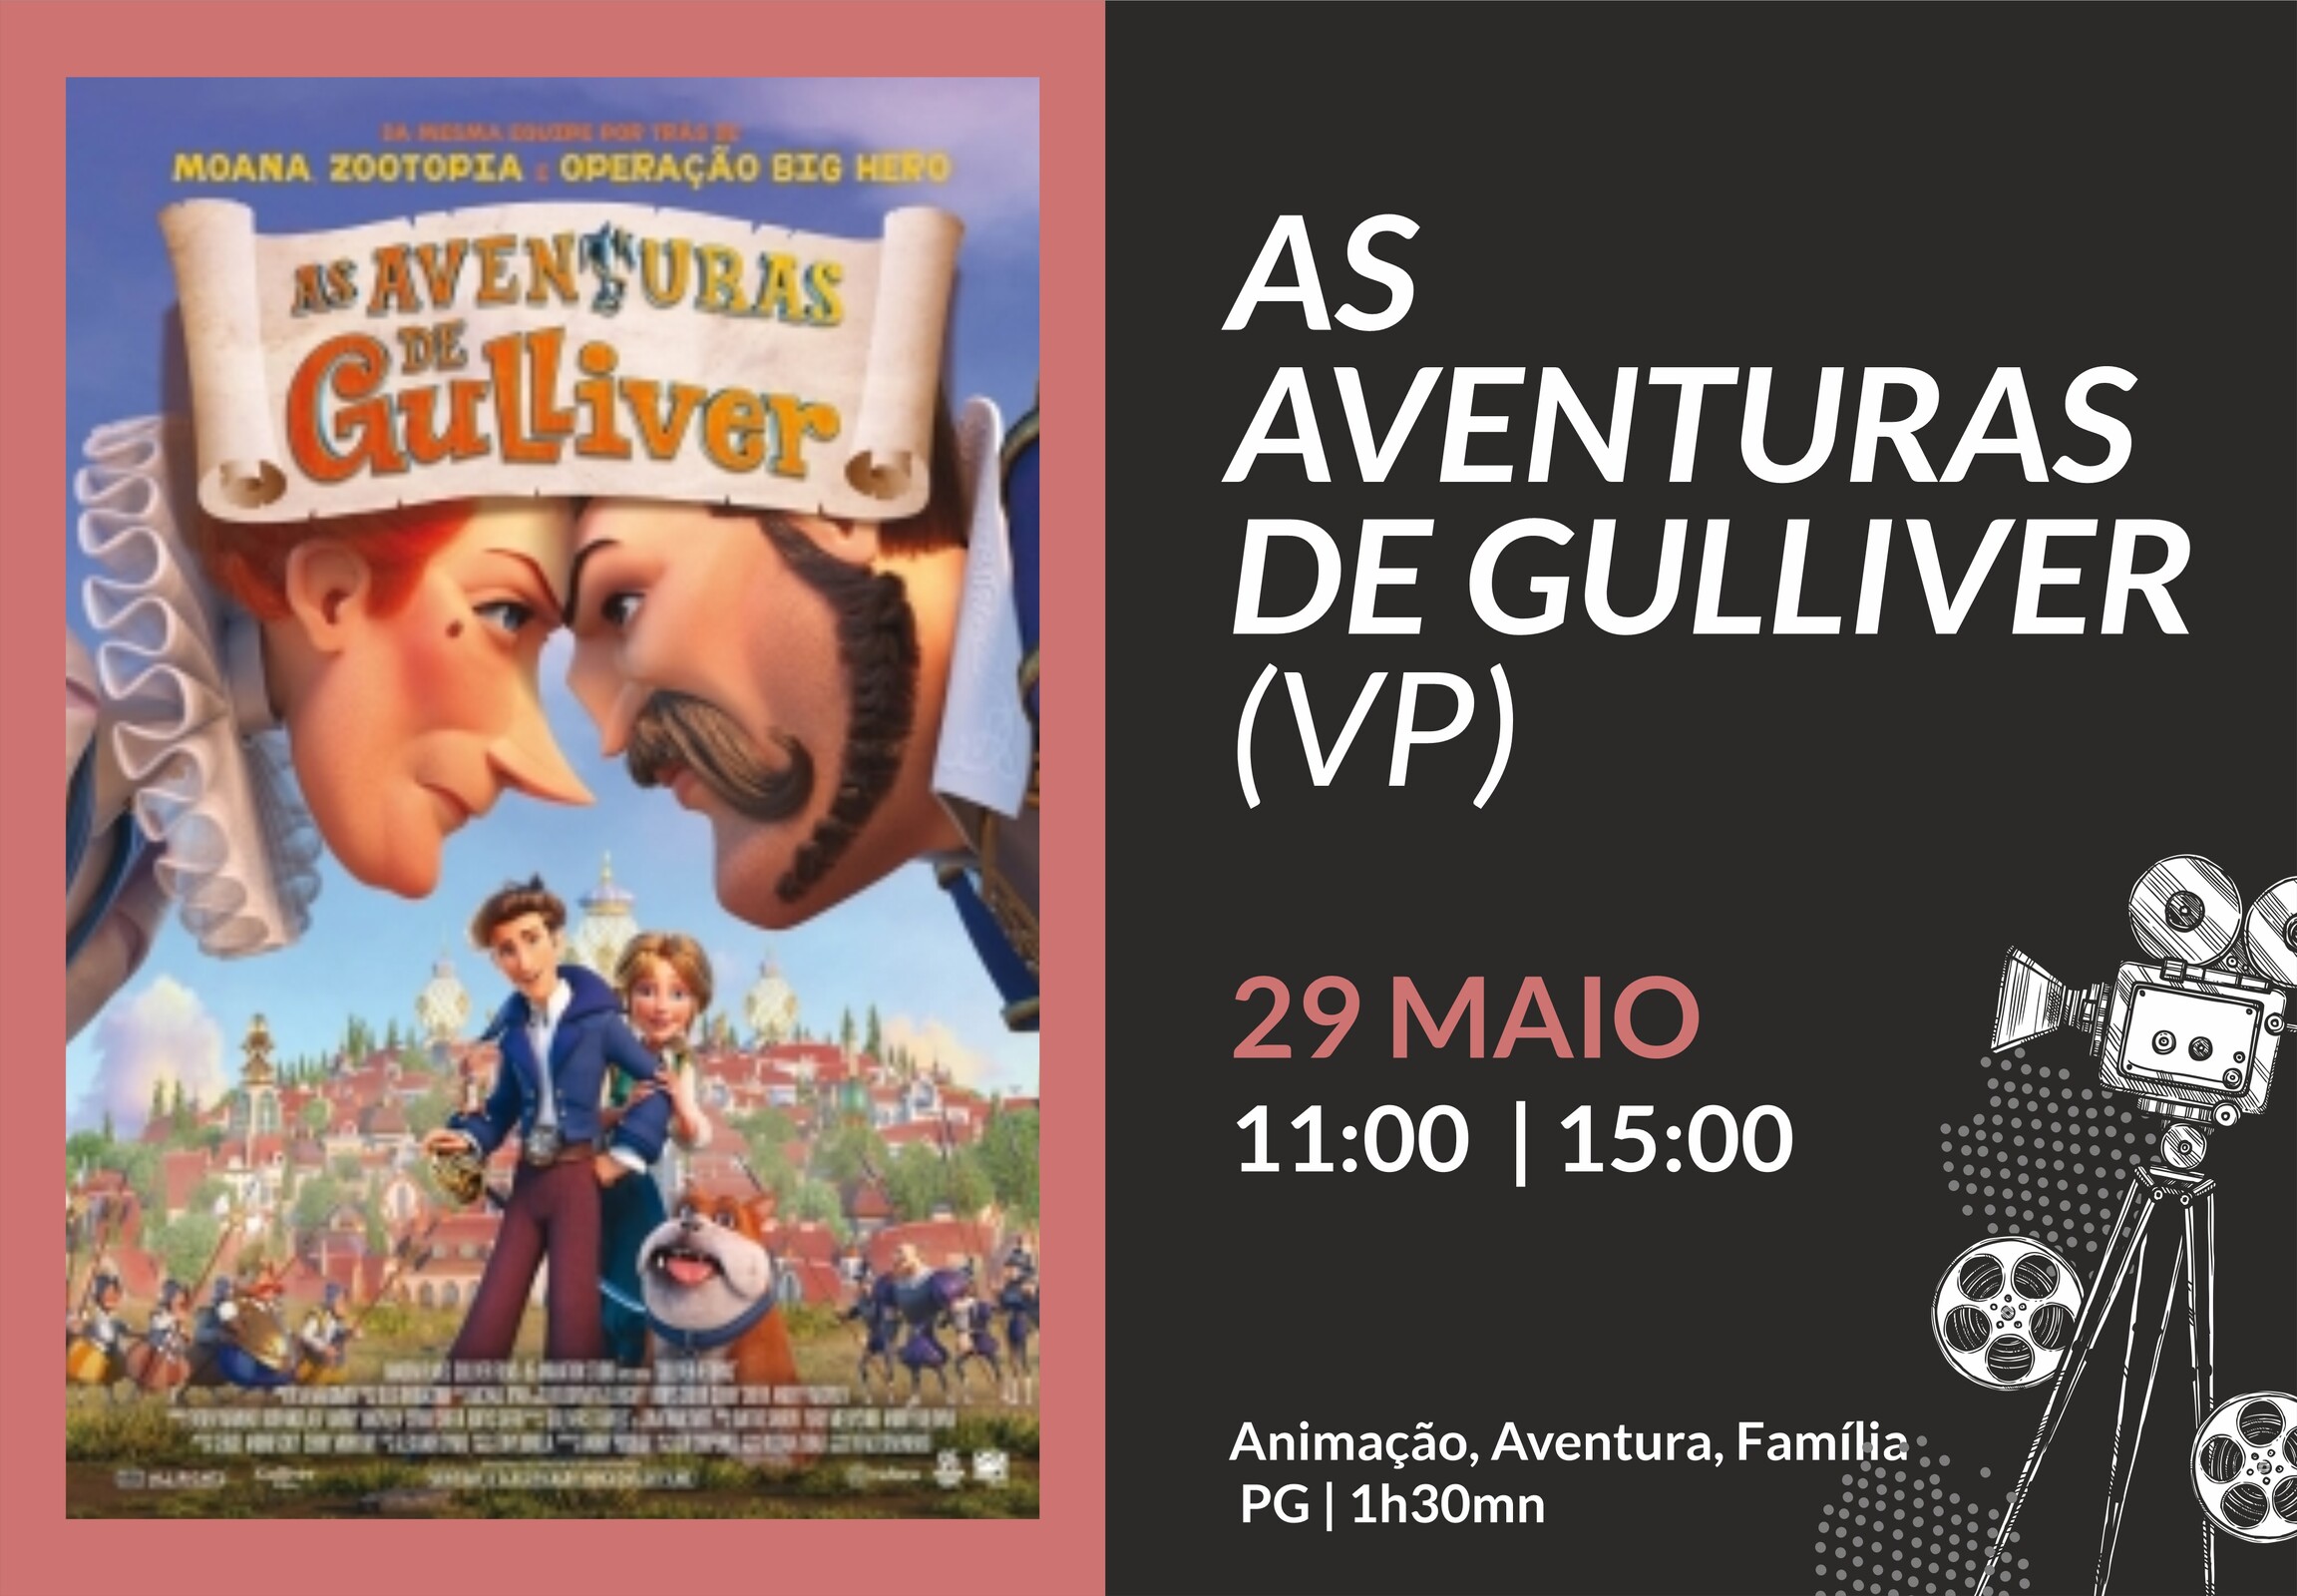 As aventuras de Gulliver - cinema 